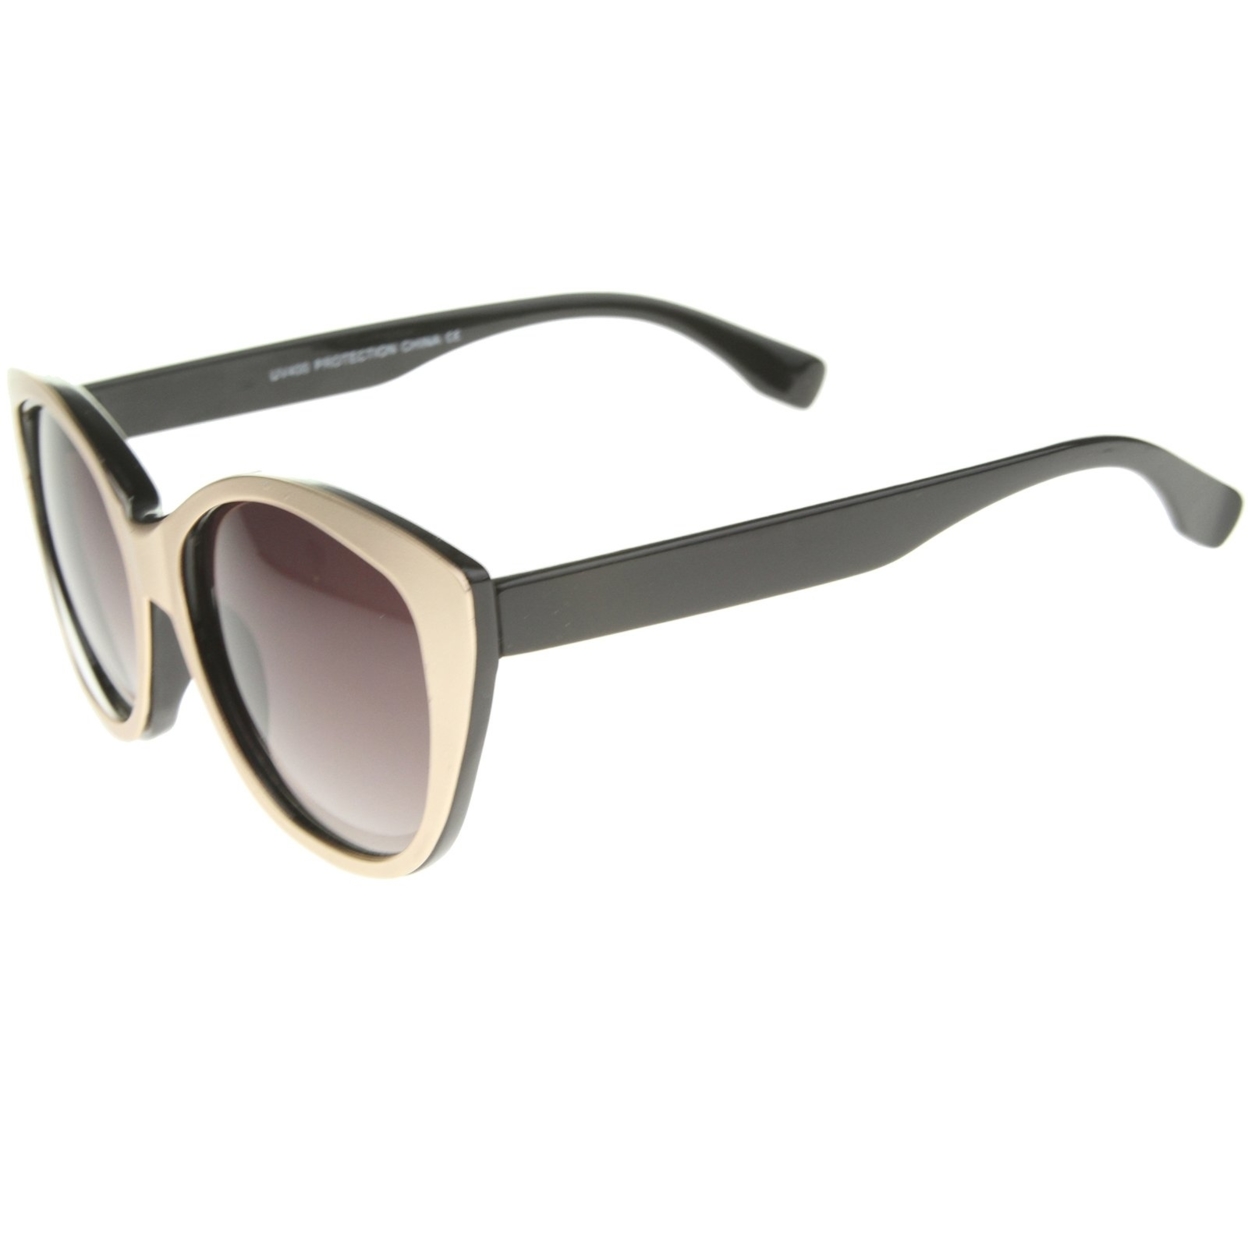 Women's High Fashion Two-Toned Tinted Lens Oversize Cat Eye Sunglasses 55mm - Black-Gunmetal / Smoke